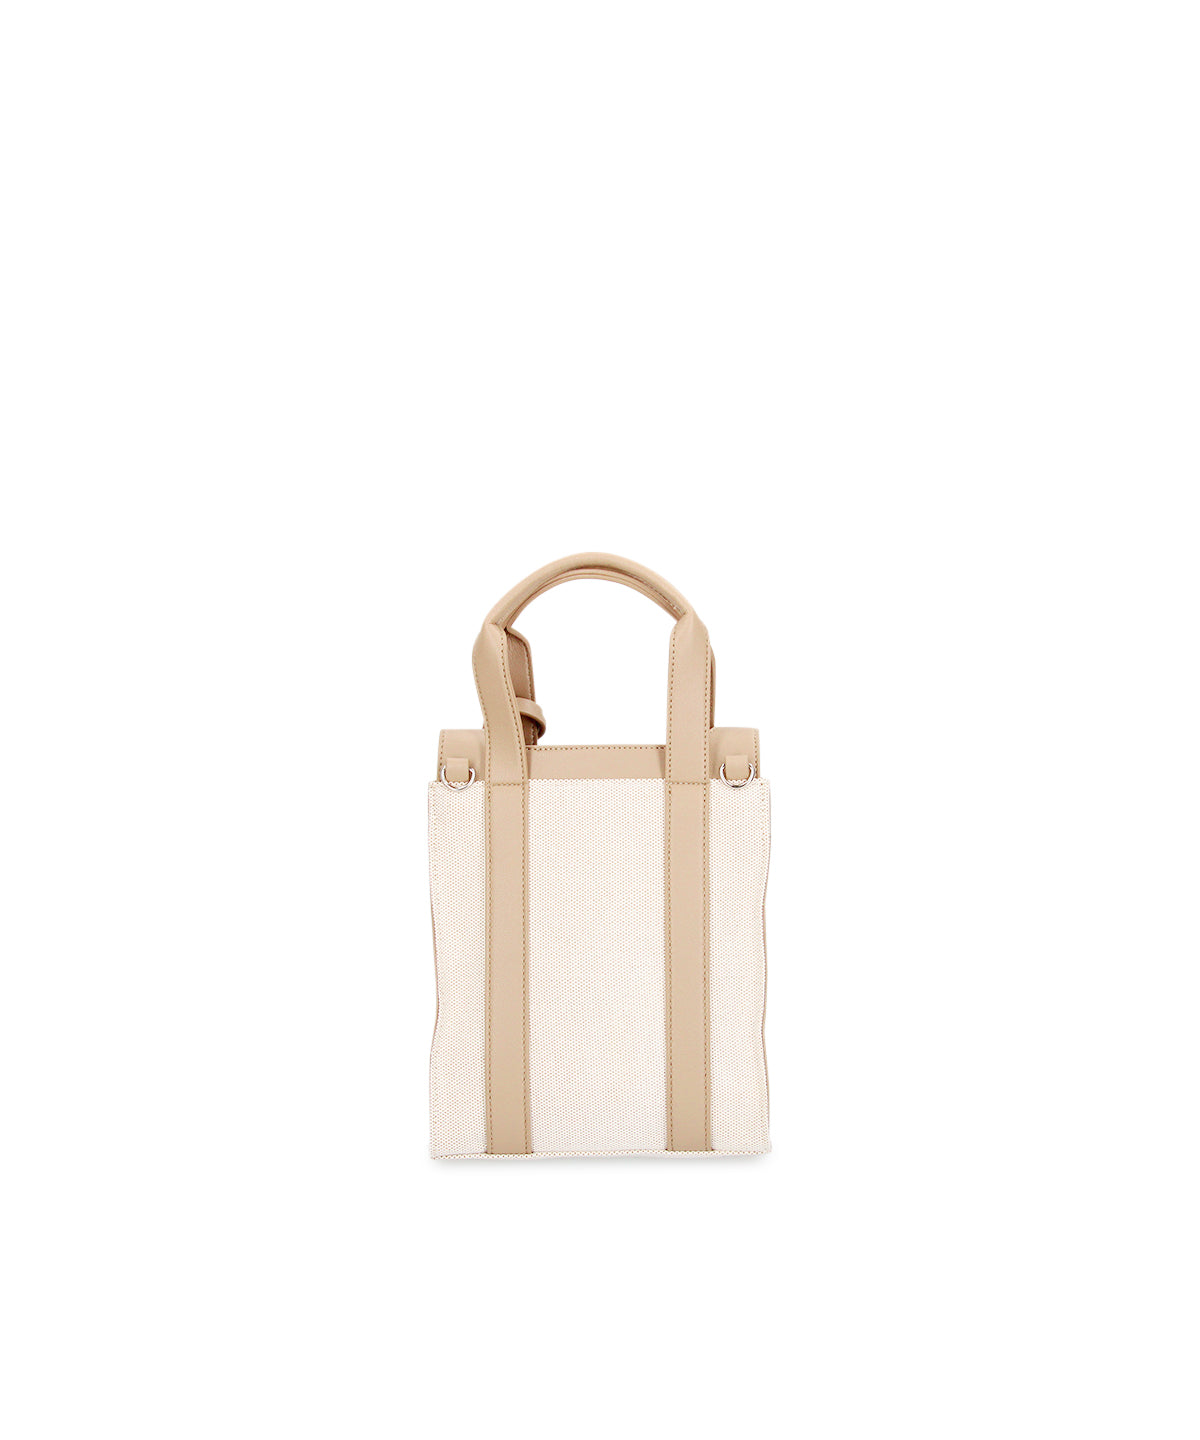 Two Tone Kente Shoulder Bag (Small )GREIGE